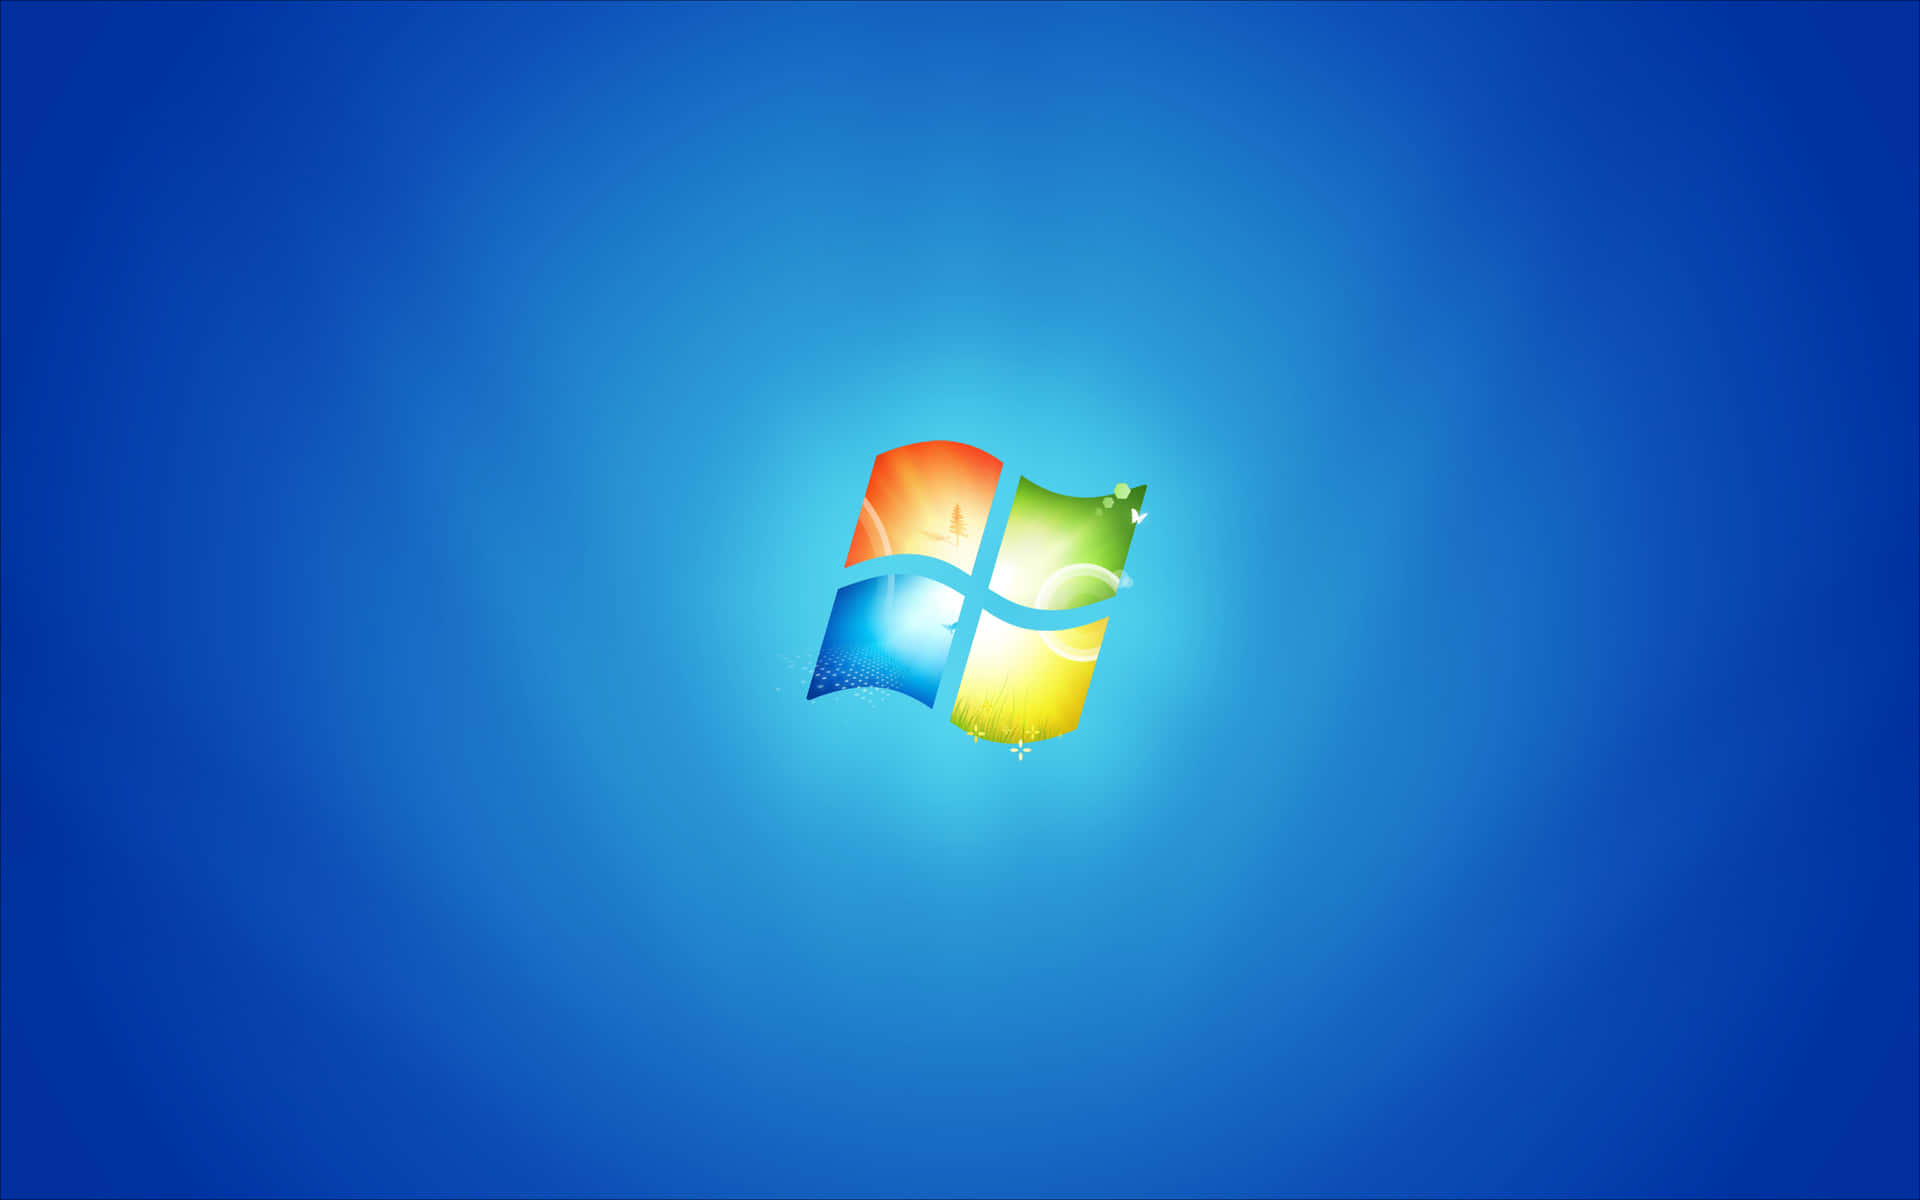 Microsoftswindows 7: Ett Effektivt Och Modernt Operativsystem